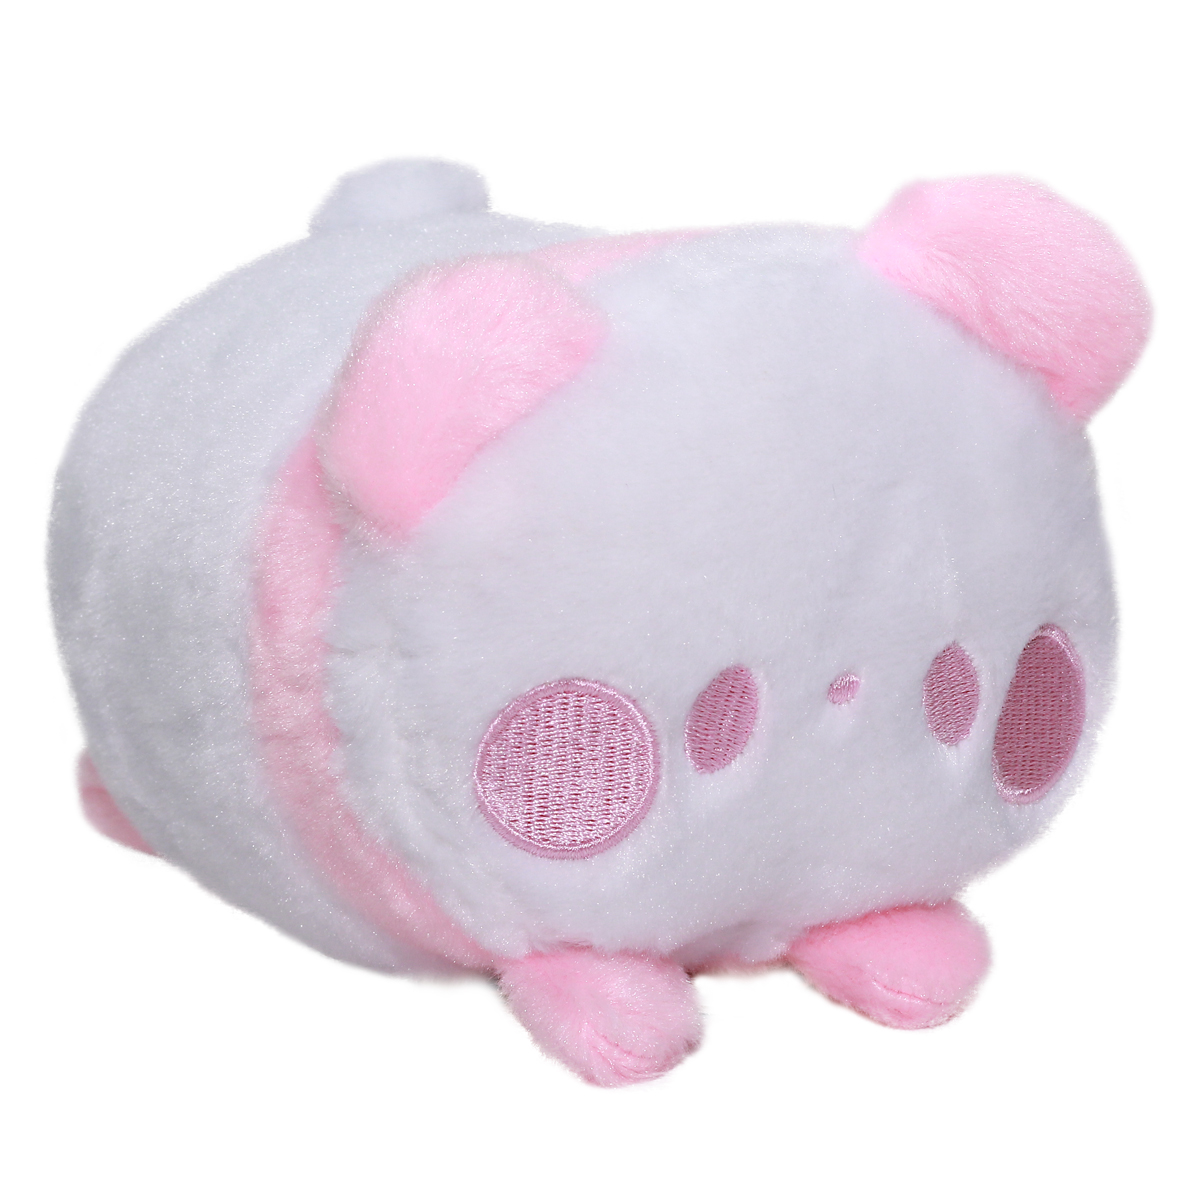 Super Soft Mochii Cute Panda Plush Japanese Squishy Plushie Toy Kawaii Bear Pink White 5